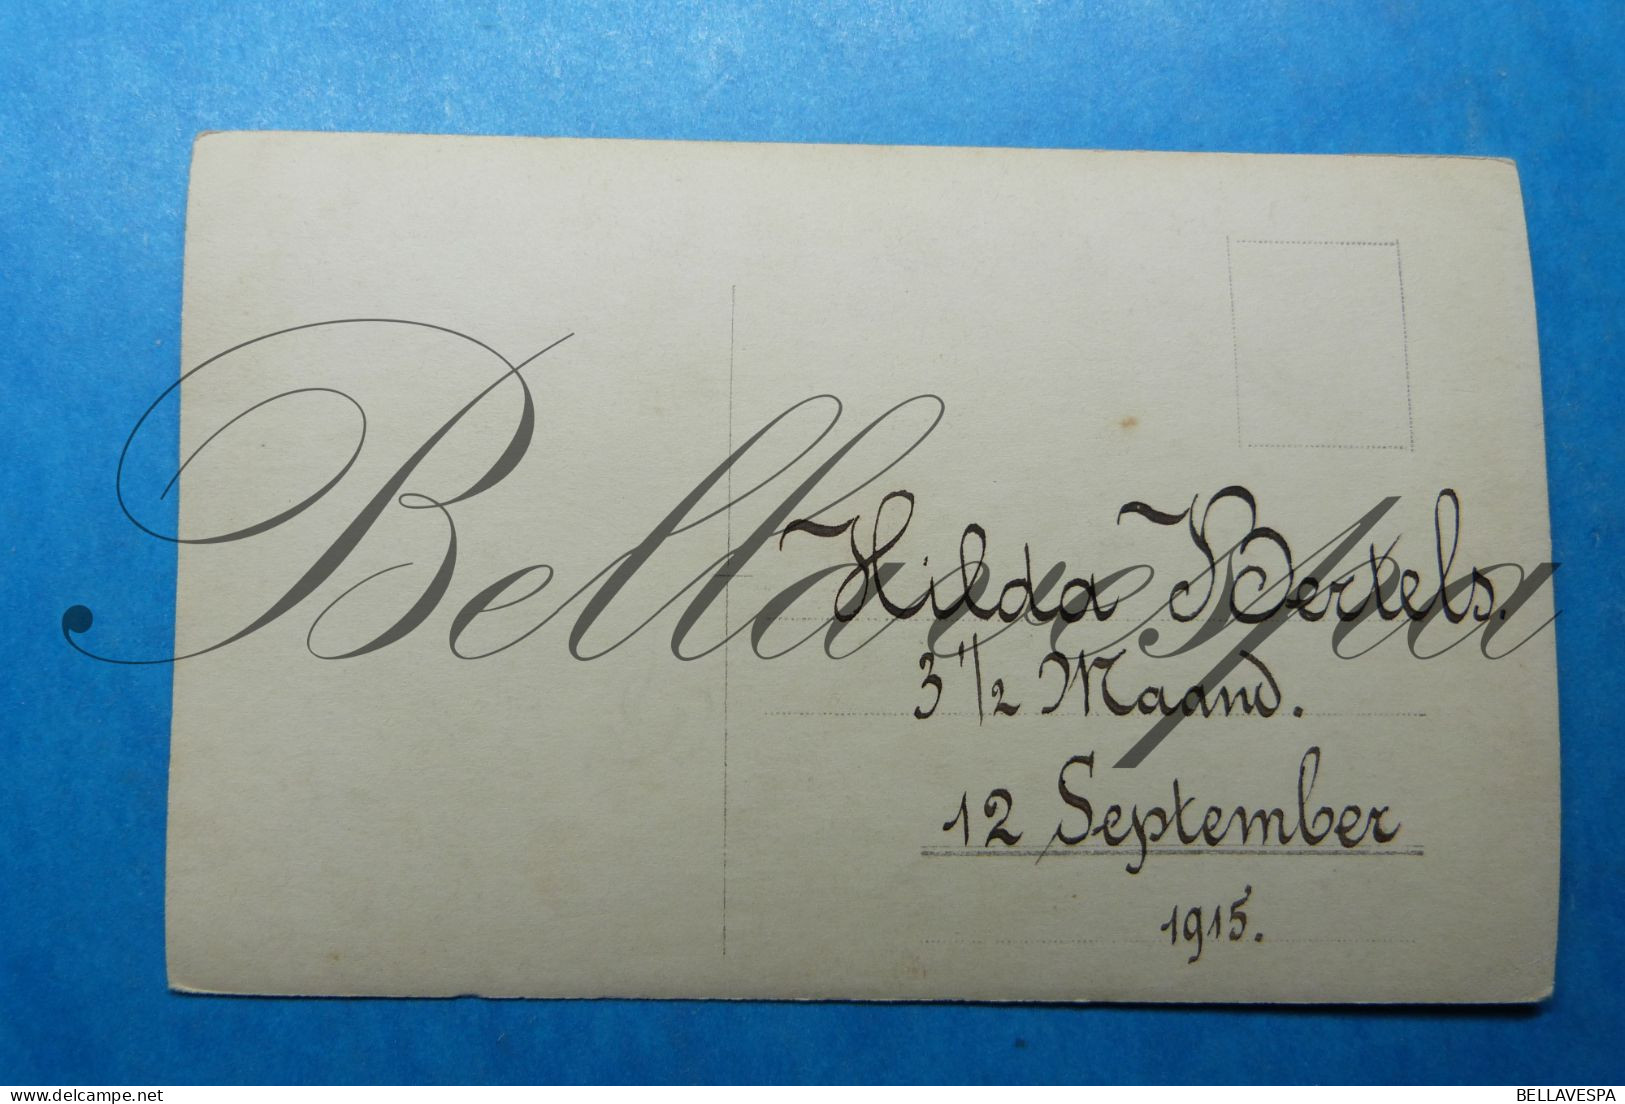 Carte Photo Bebe Hilda Berteles 3 ,5 Maand - 12 September 1915 - Généalogie